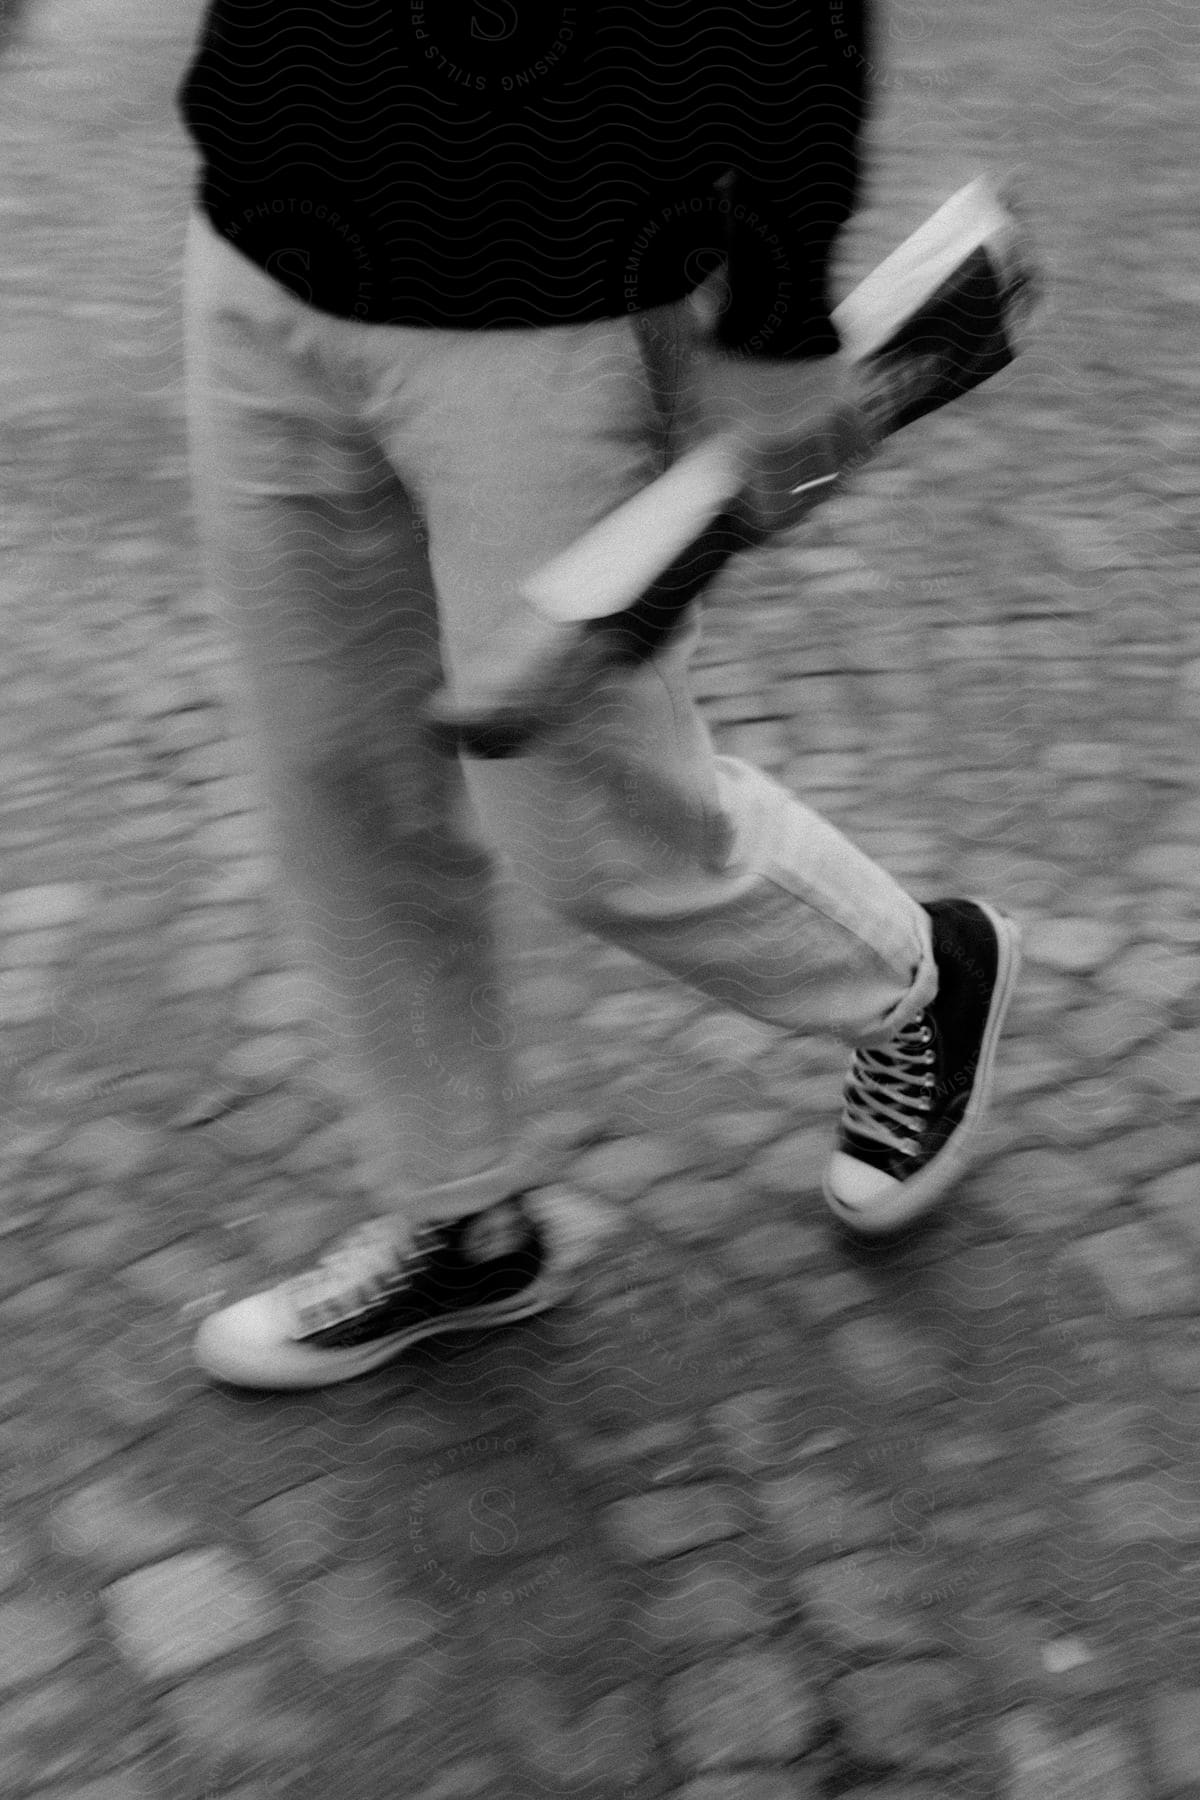 A person wearing sneakers walks on cobblestone